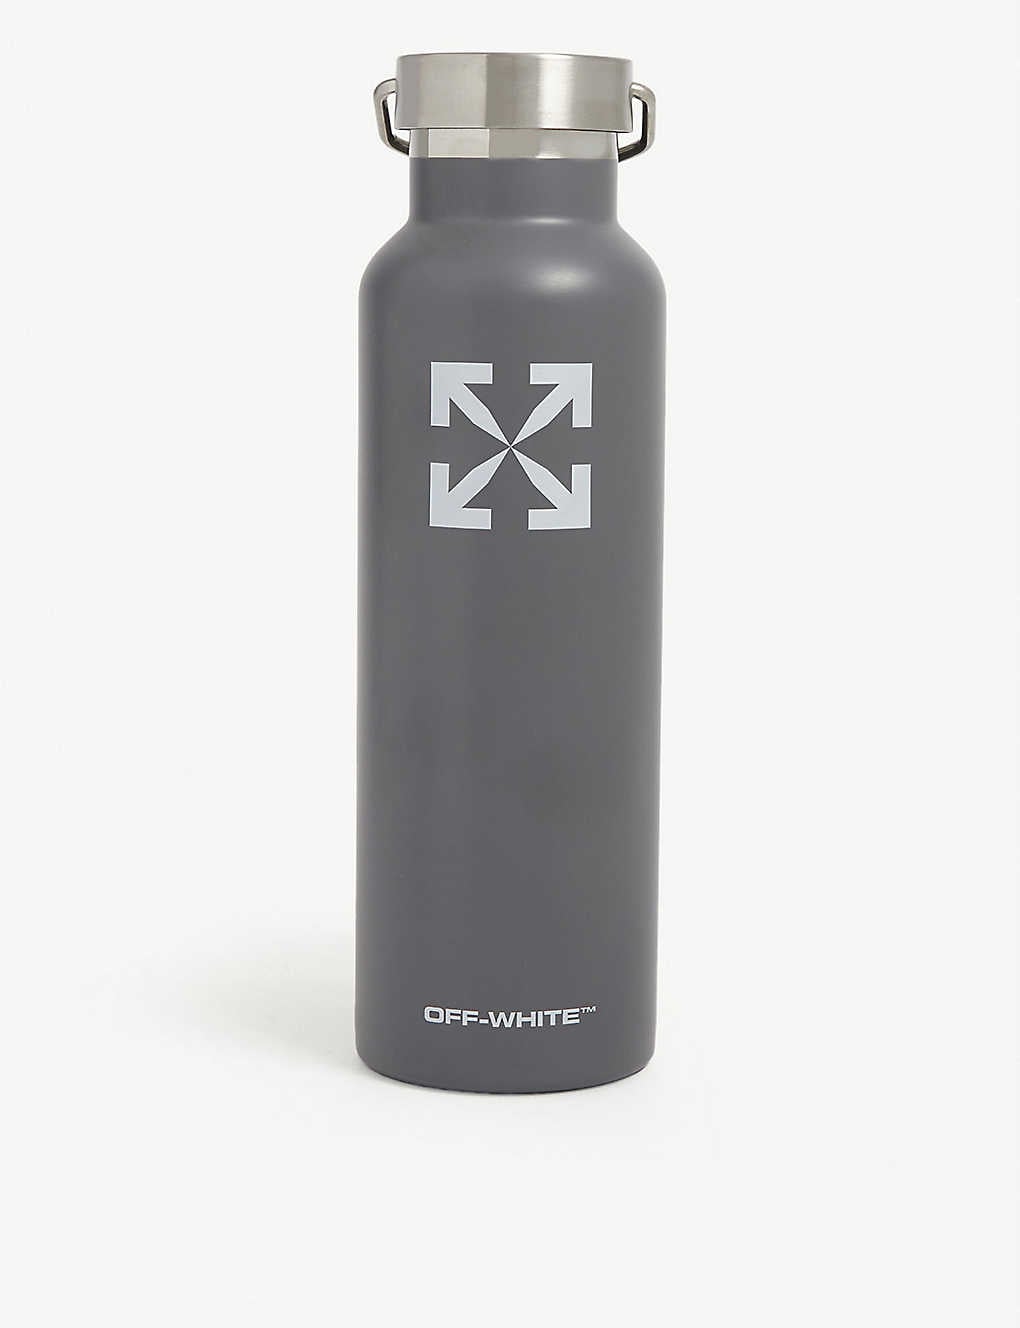 Chanel Inspired Water Bottle